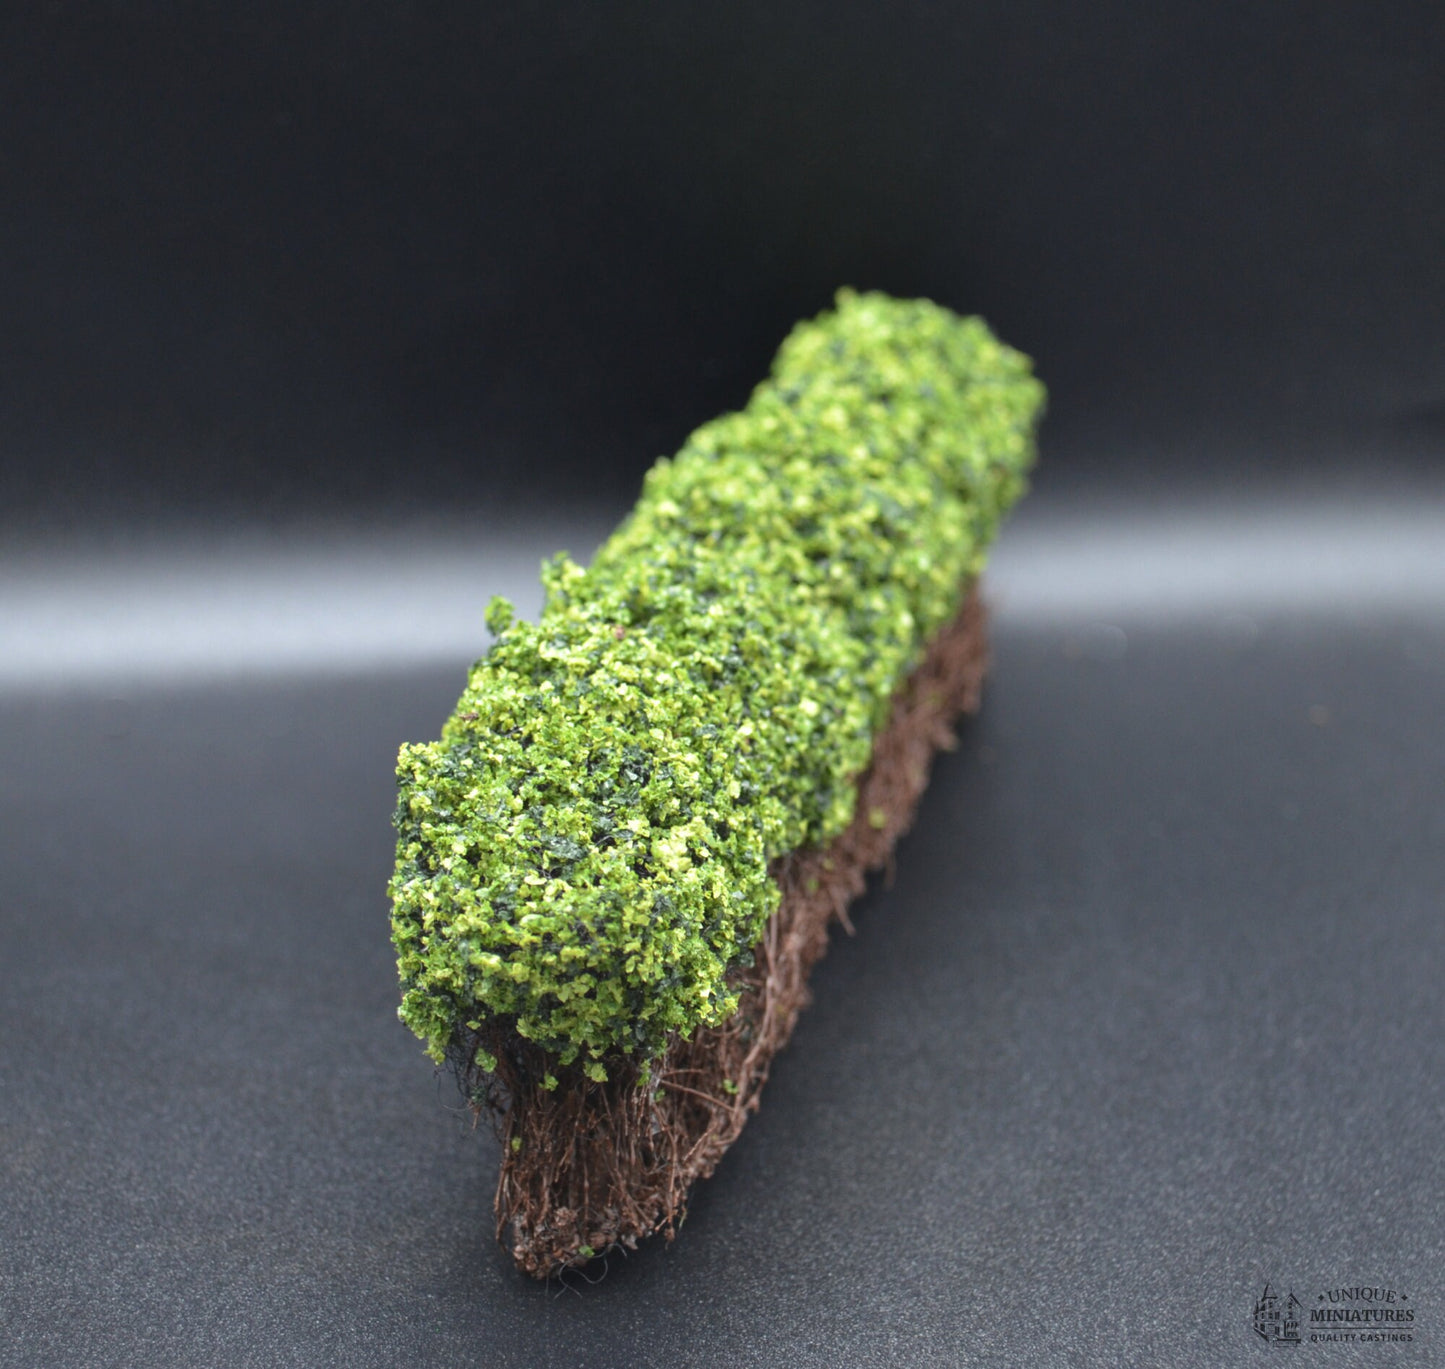 Trimmed Green Garden Bushes | 8 Inches | Miniature for Garden